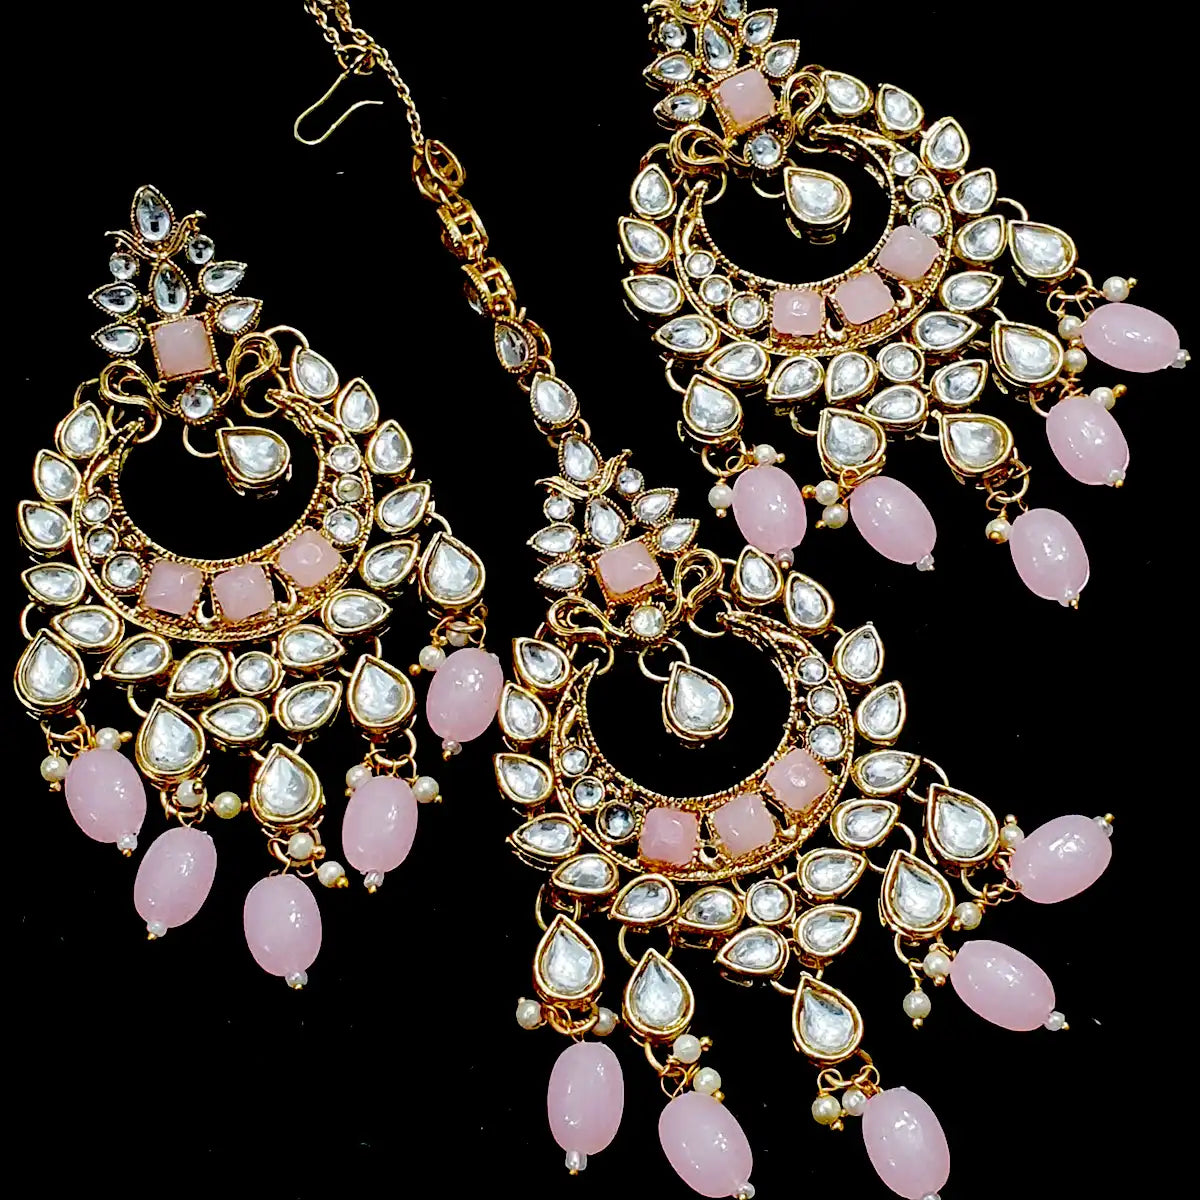 balas earrings price in Pakistan njc-005 pink